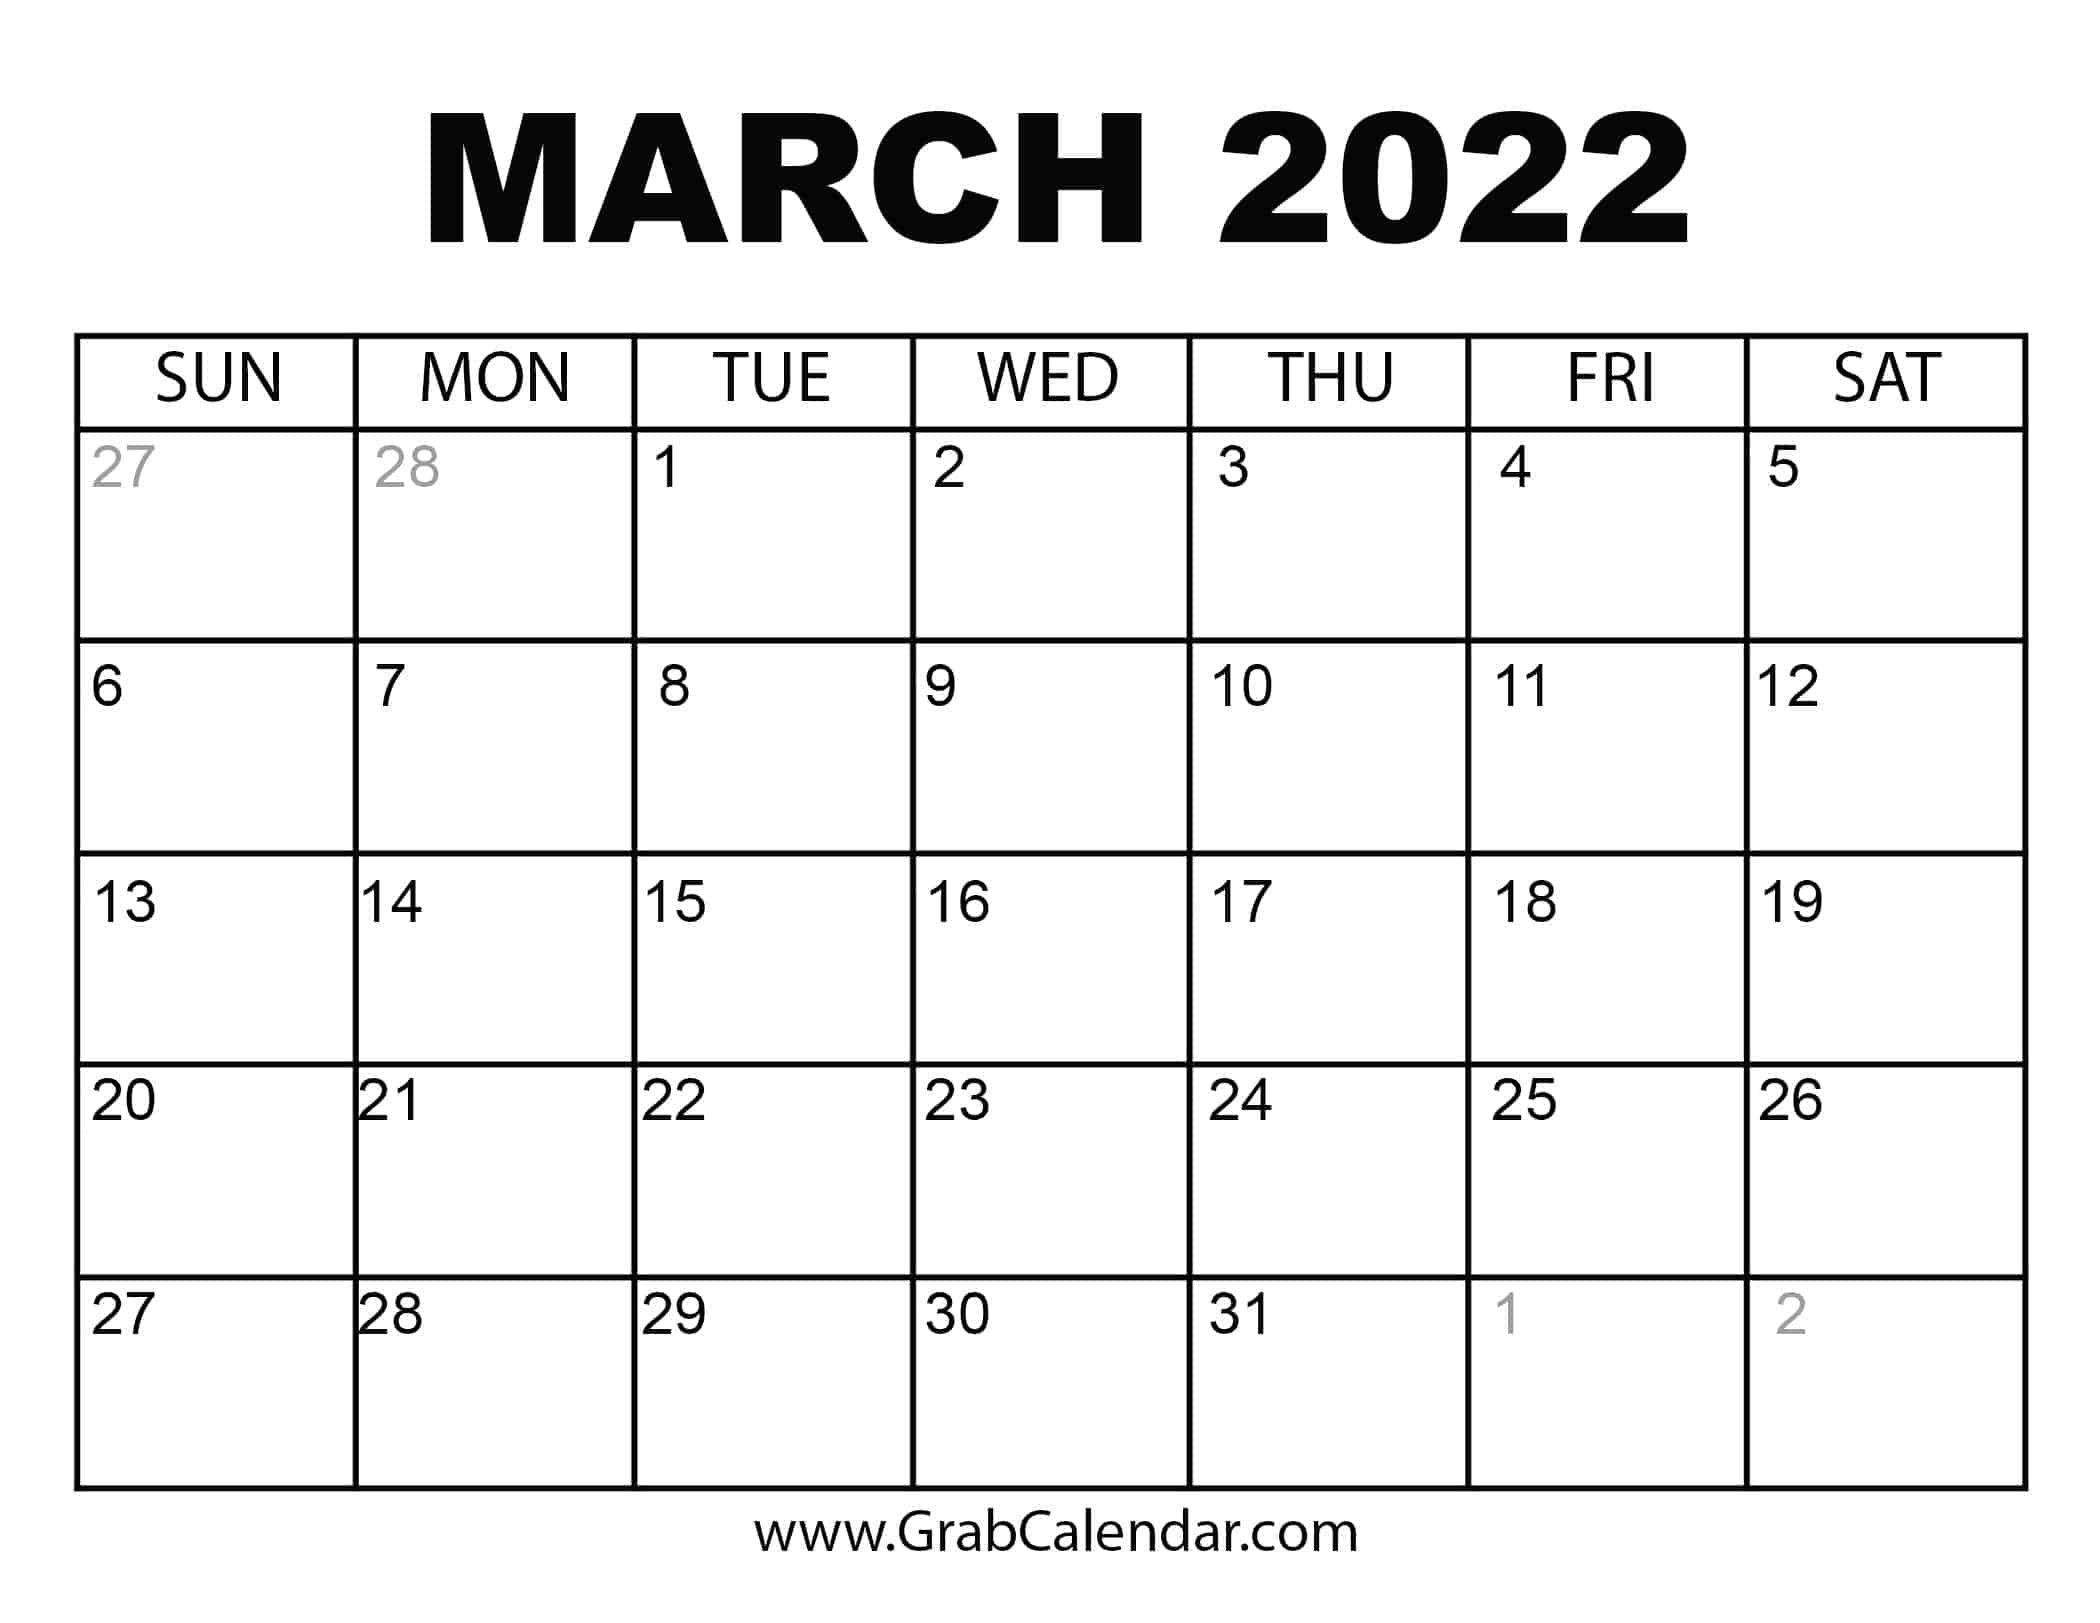 March 2022 Schedule Free Printable Calendar 2022 - Grab Calendar